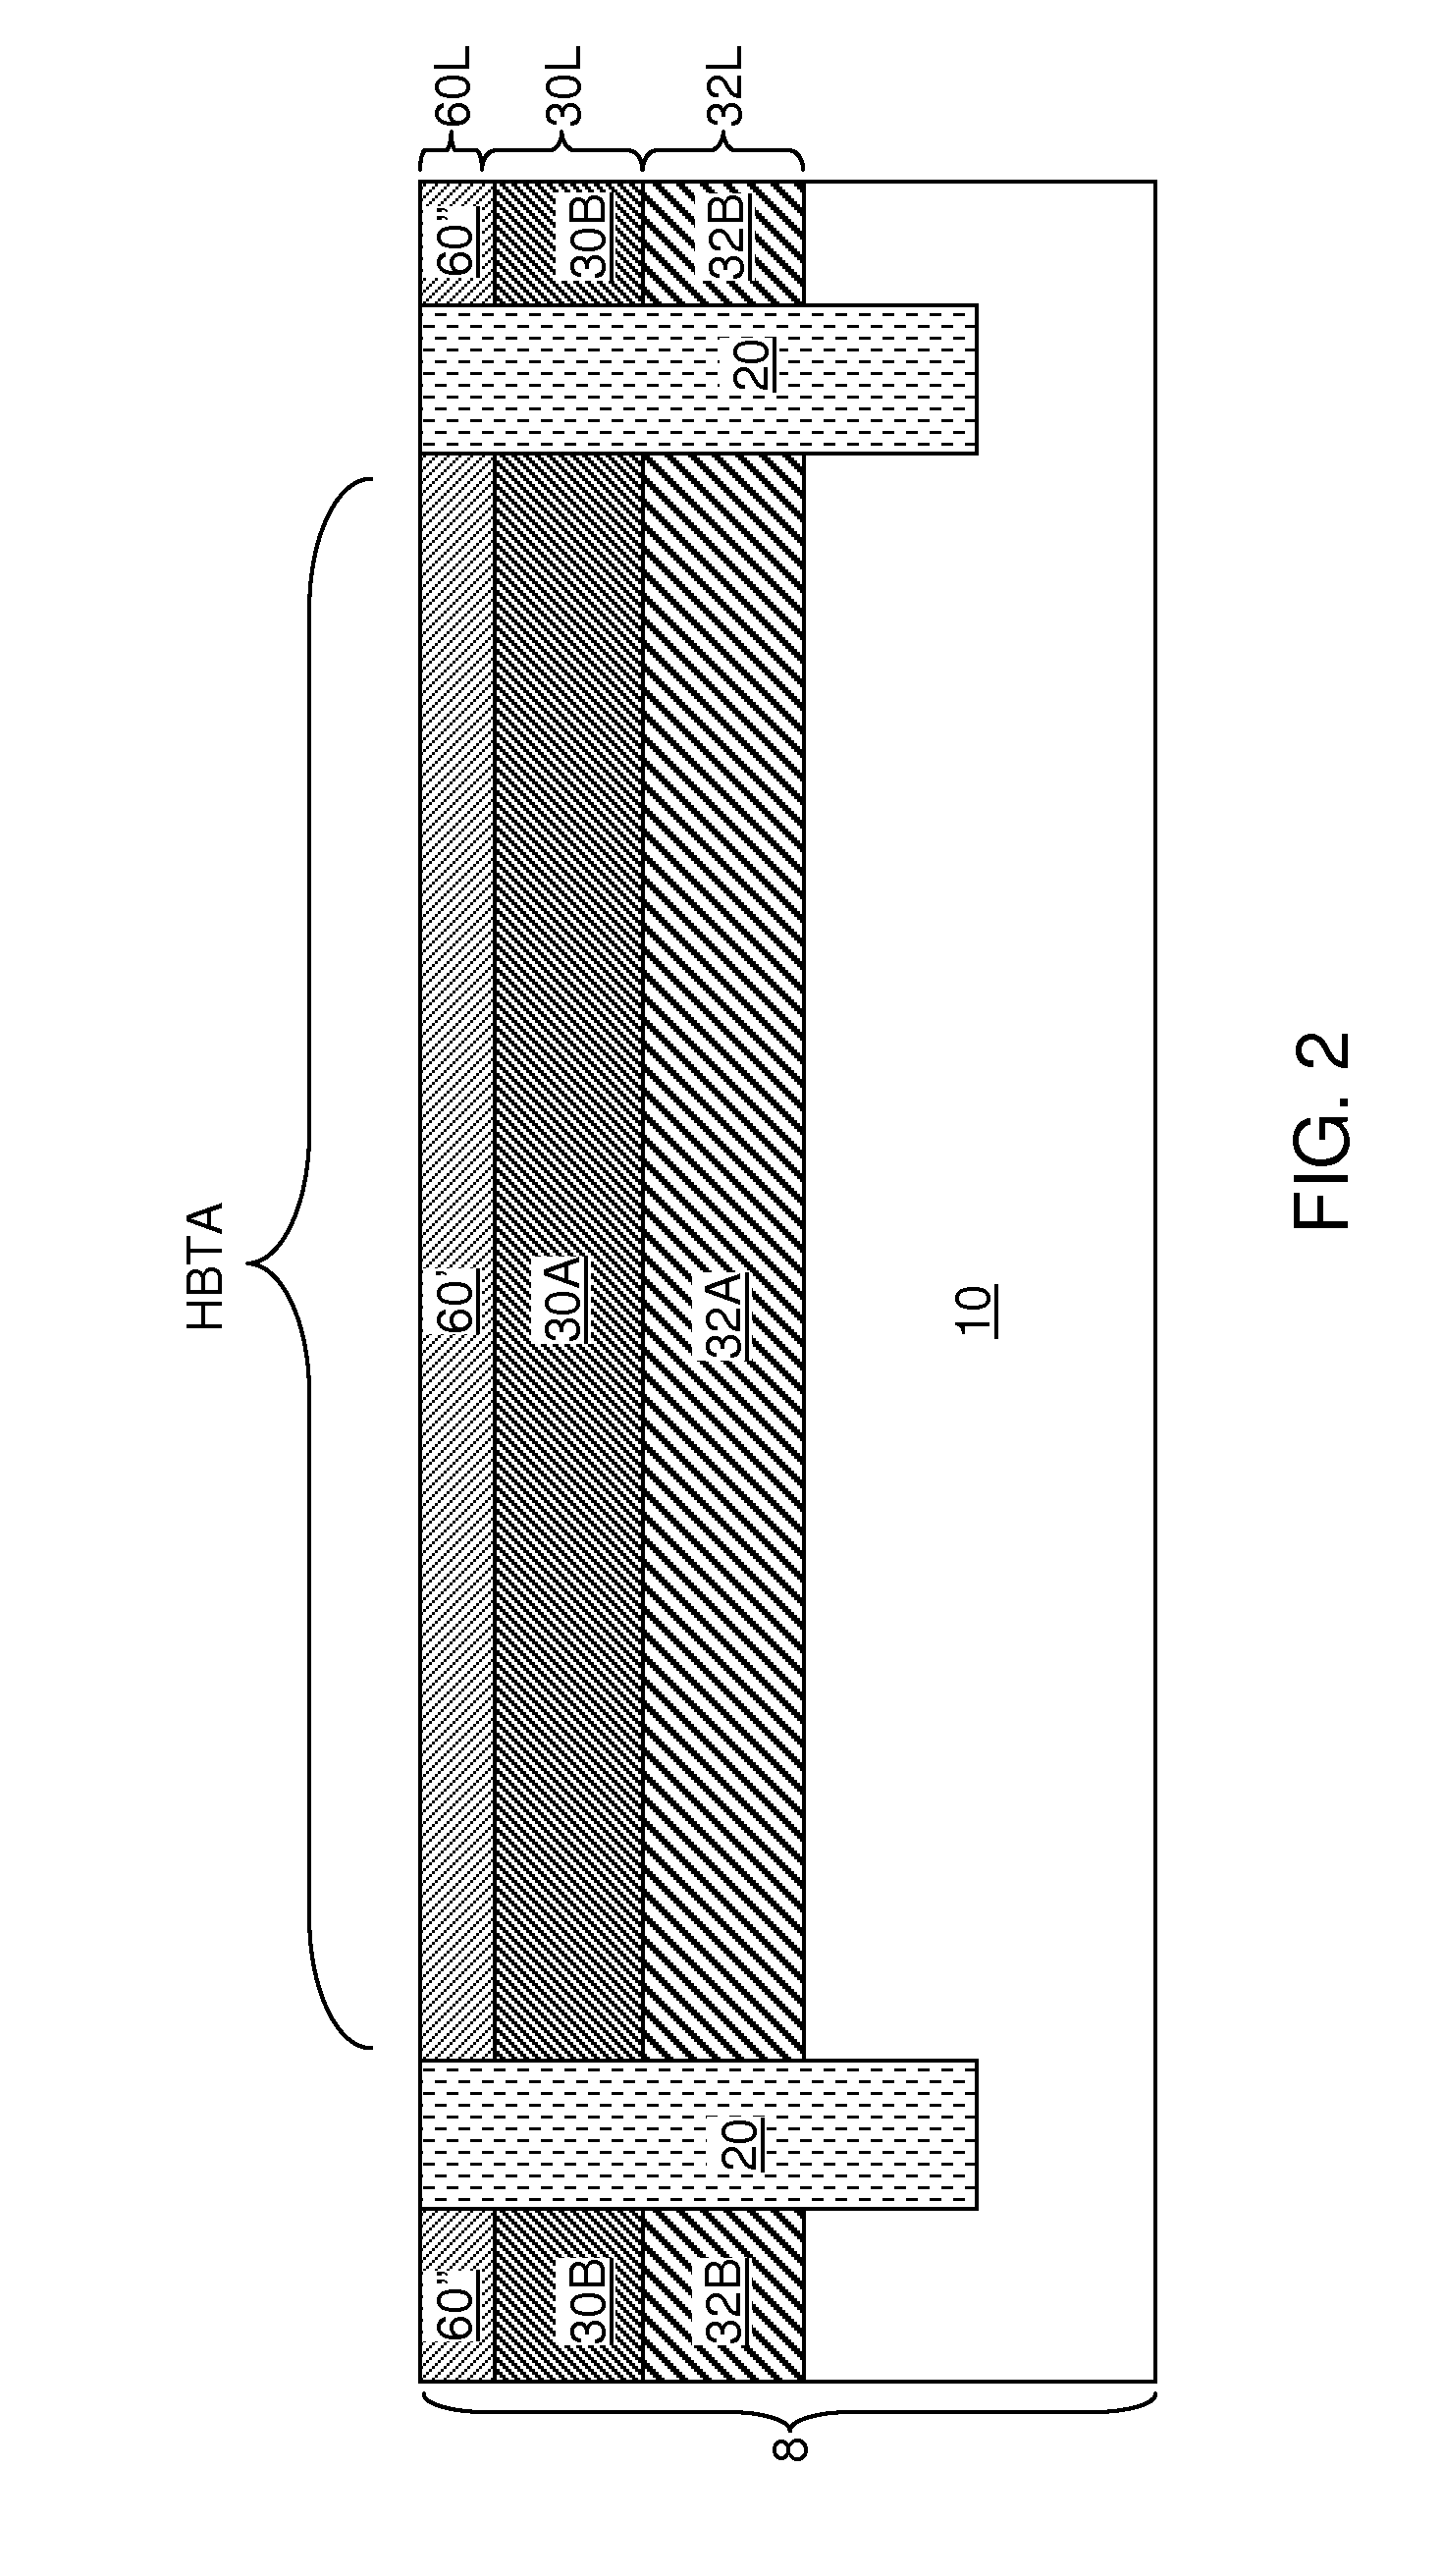 Vertical polysilicon-germanium heterojunction bipolar transistor